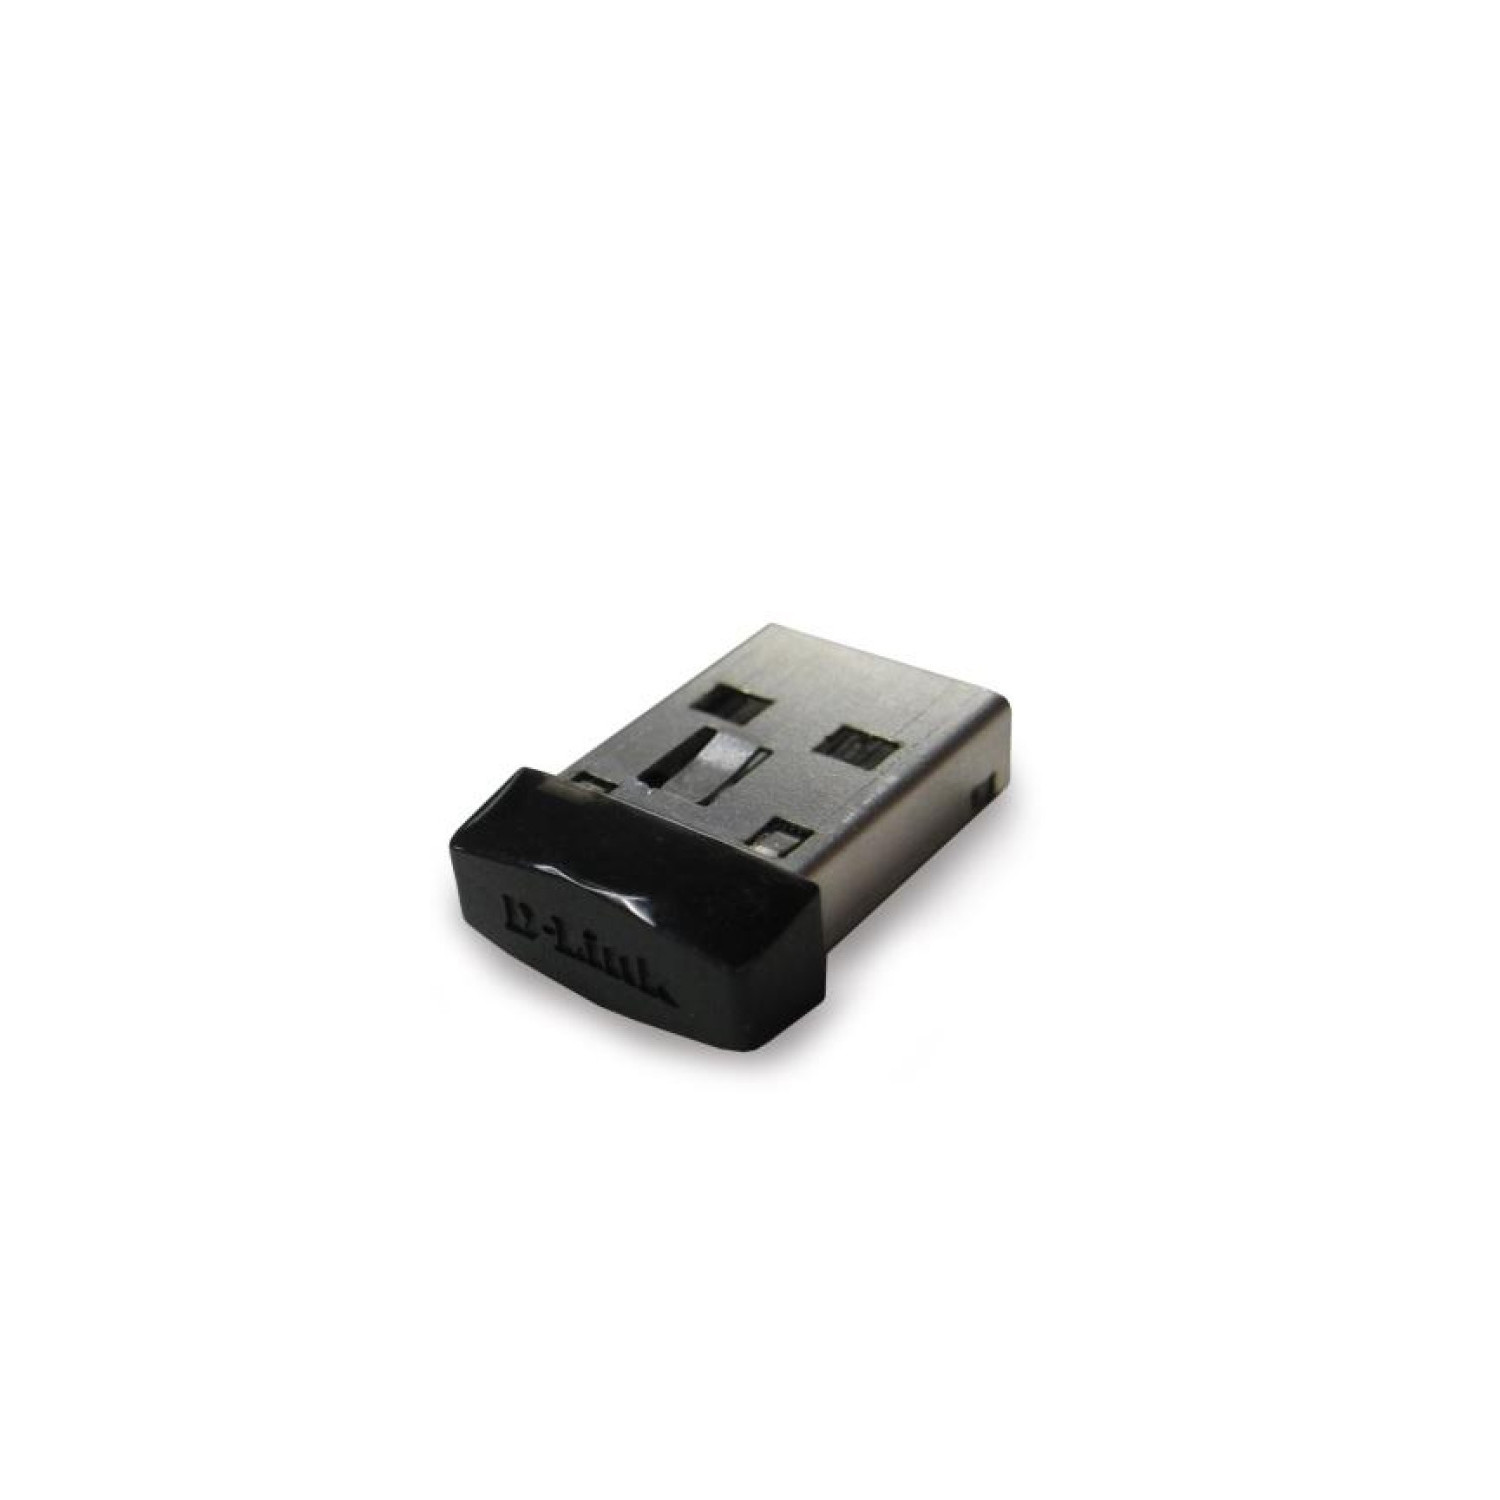 Безжичен адаптер D-Link Wireless N 150 Micro USB Adapter, WiFi, USB 2.0, DWA-121 